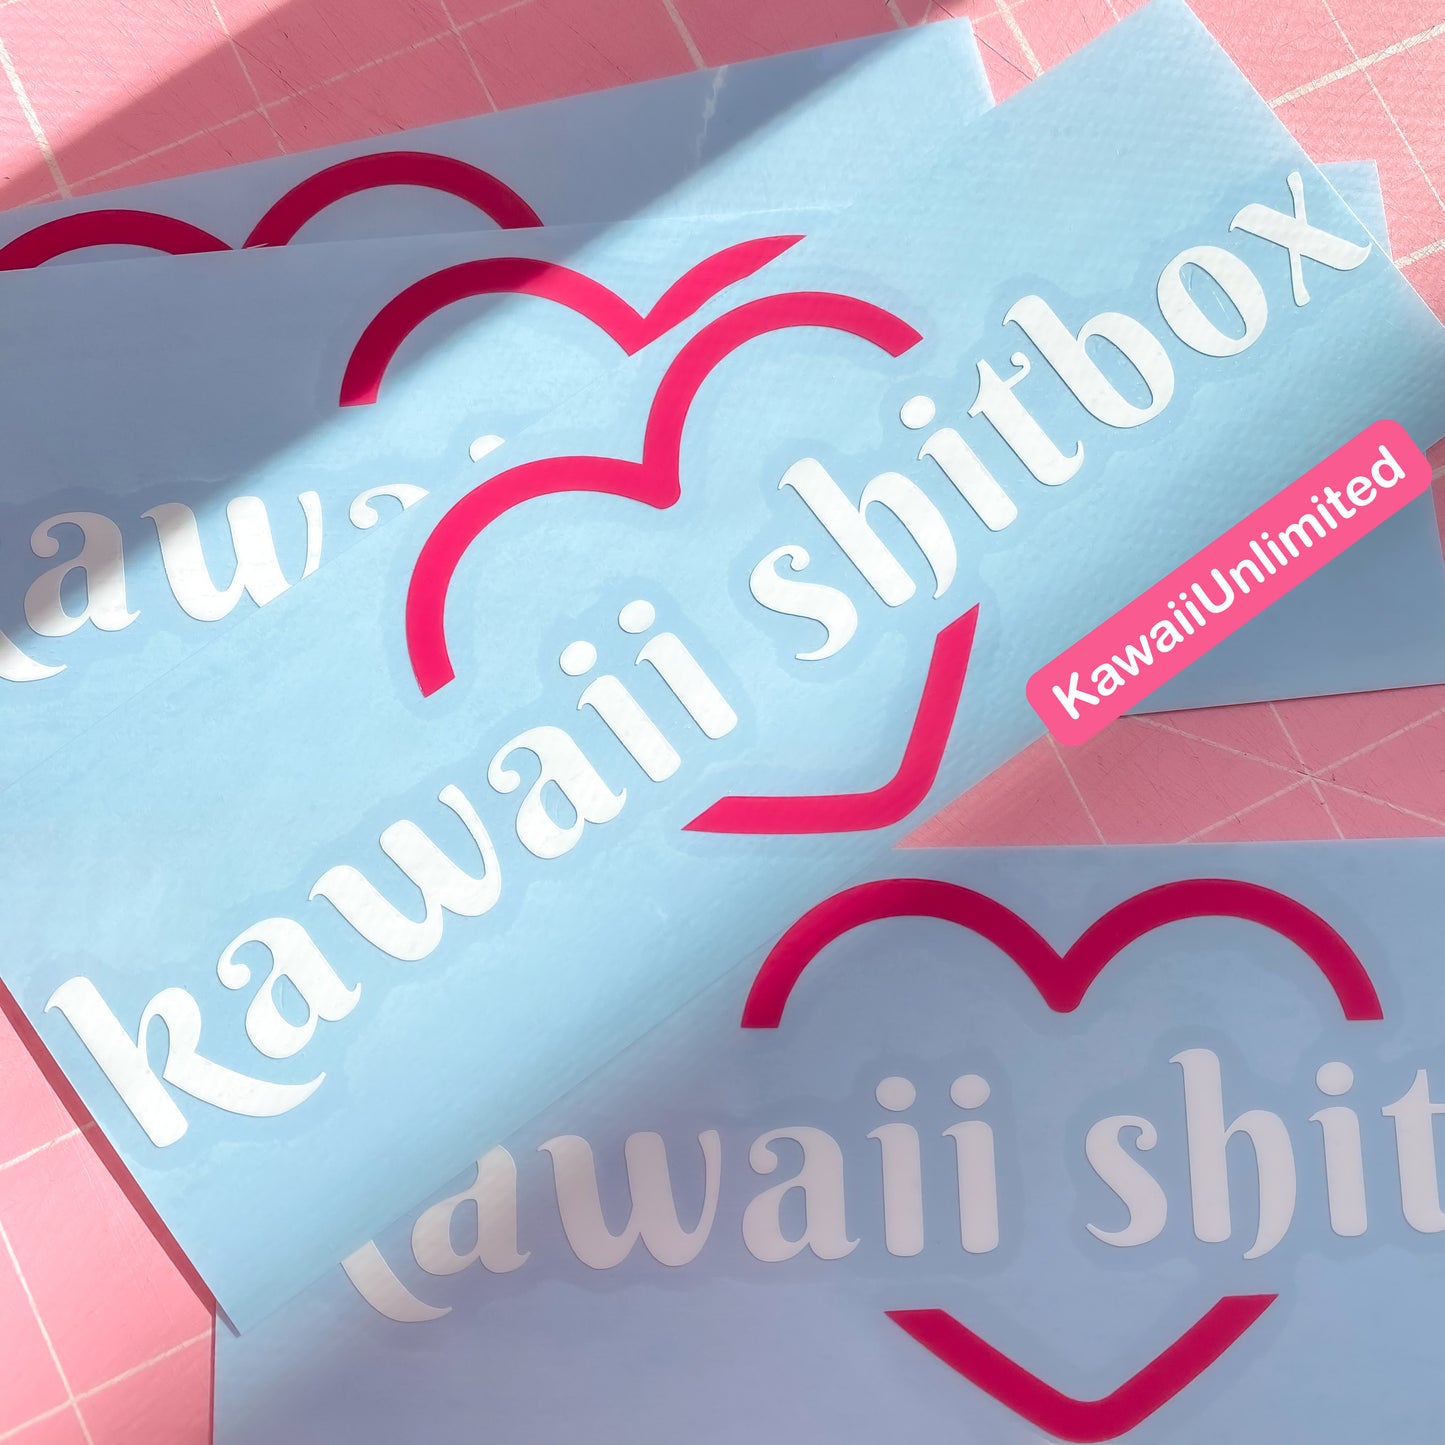 Kawaii Shitbox